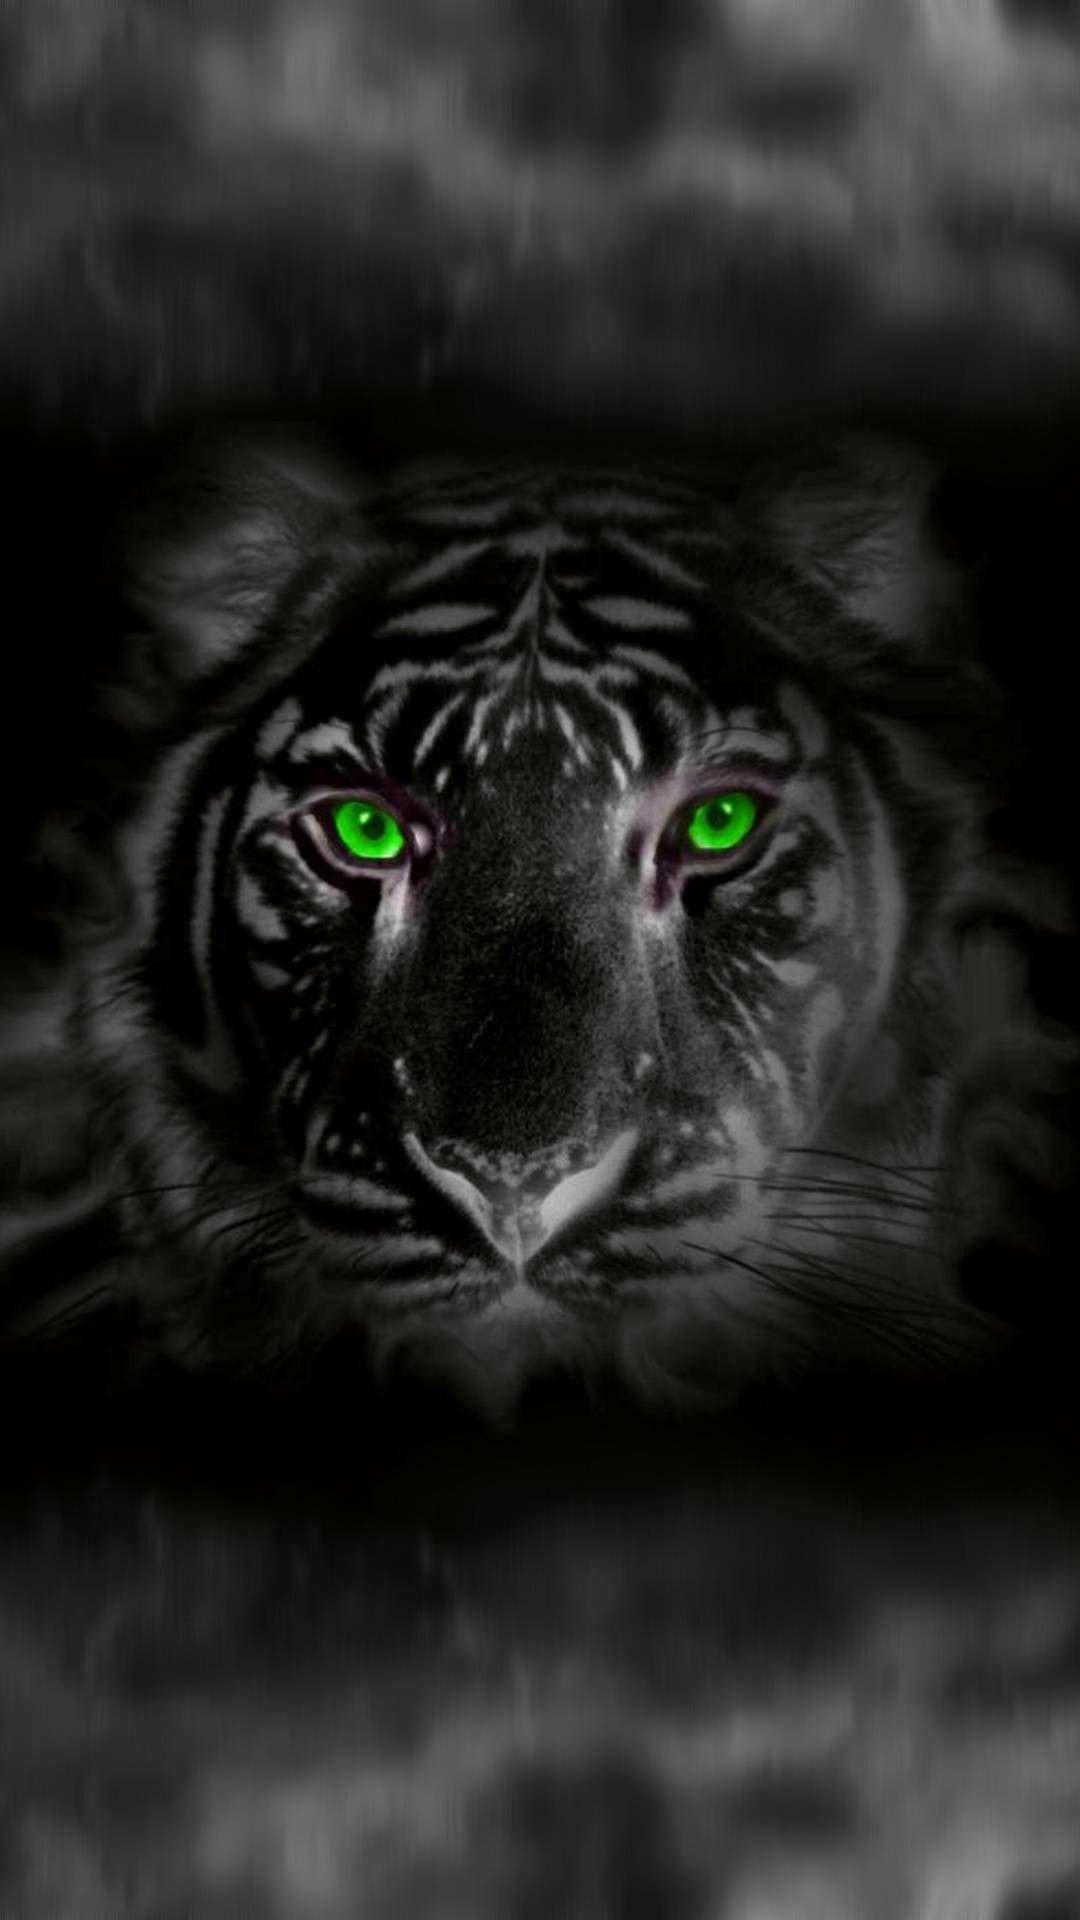 Black and White with Green Eye Logo - White tiger with green eyes | Big cats | Cats, Animals, Big cats